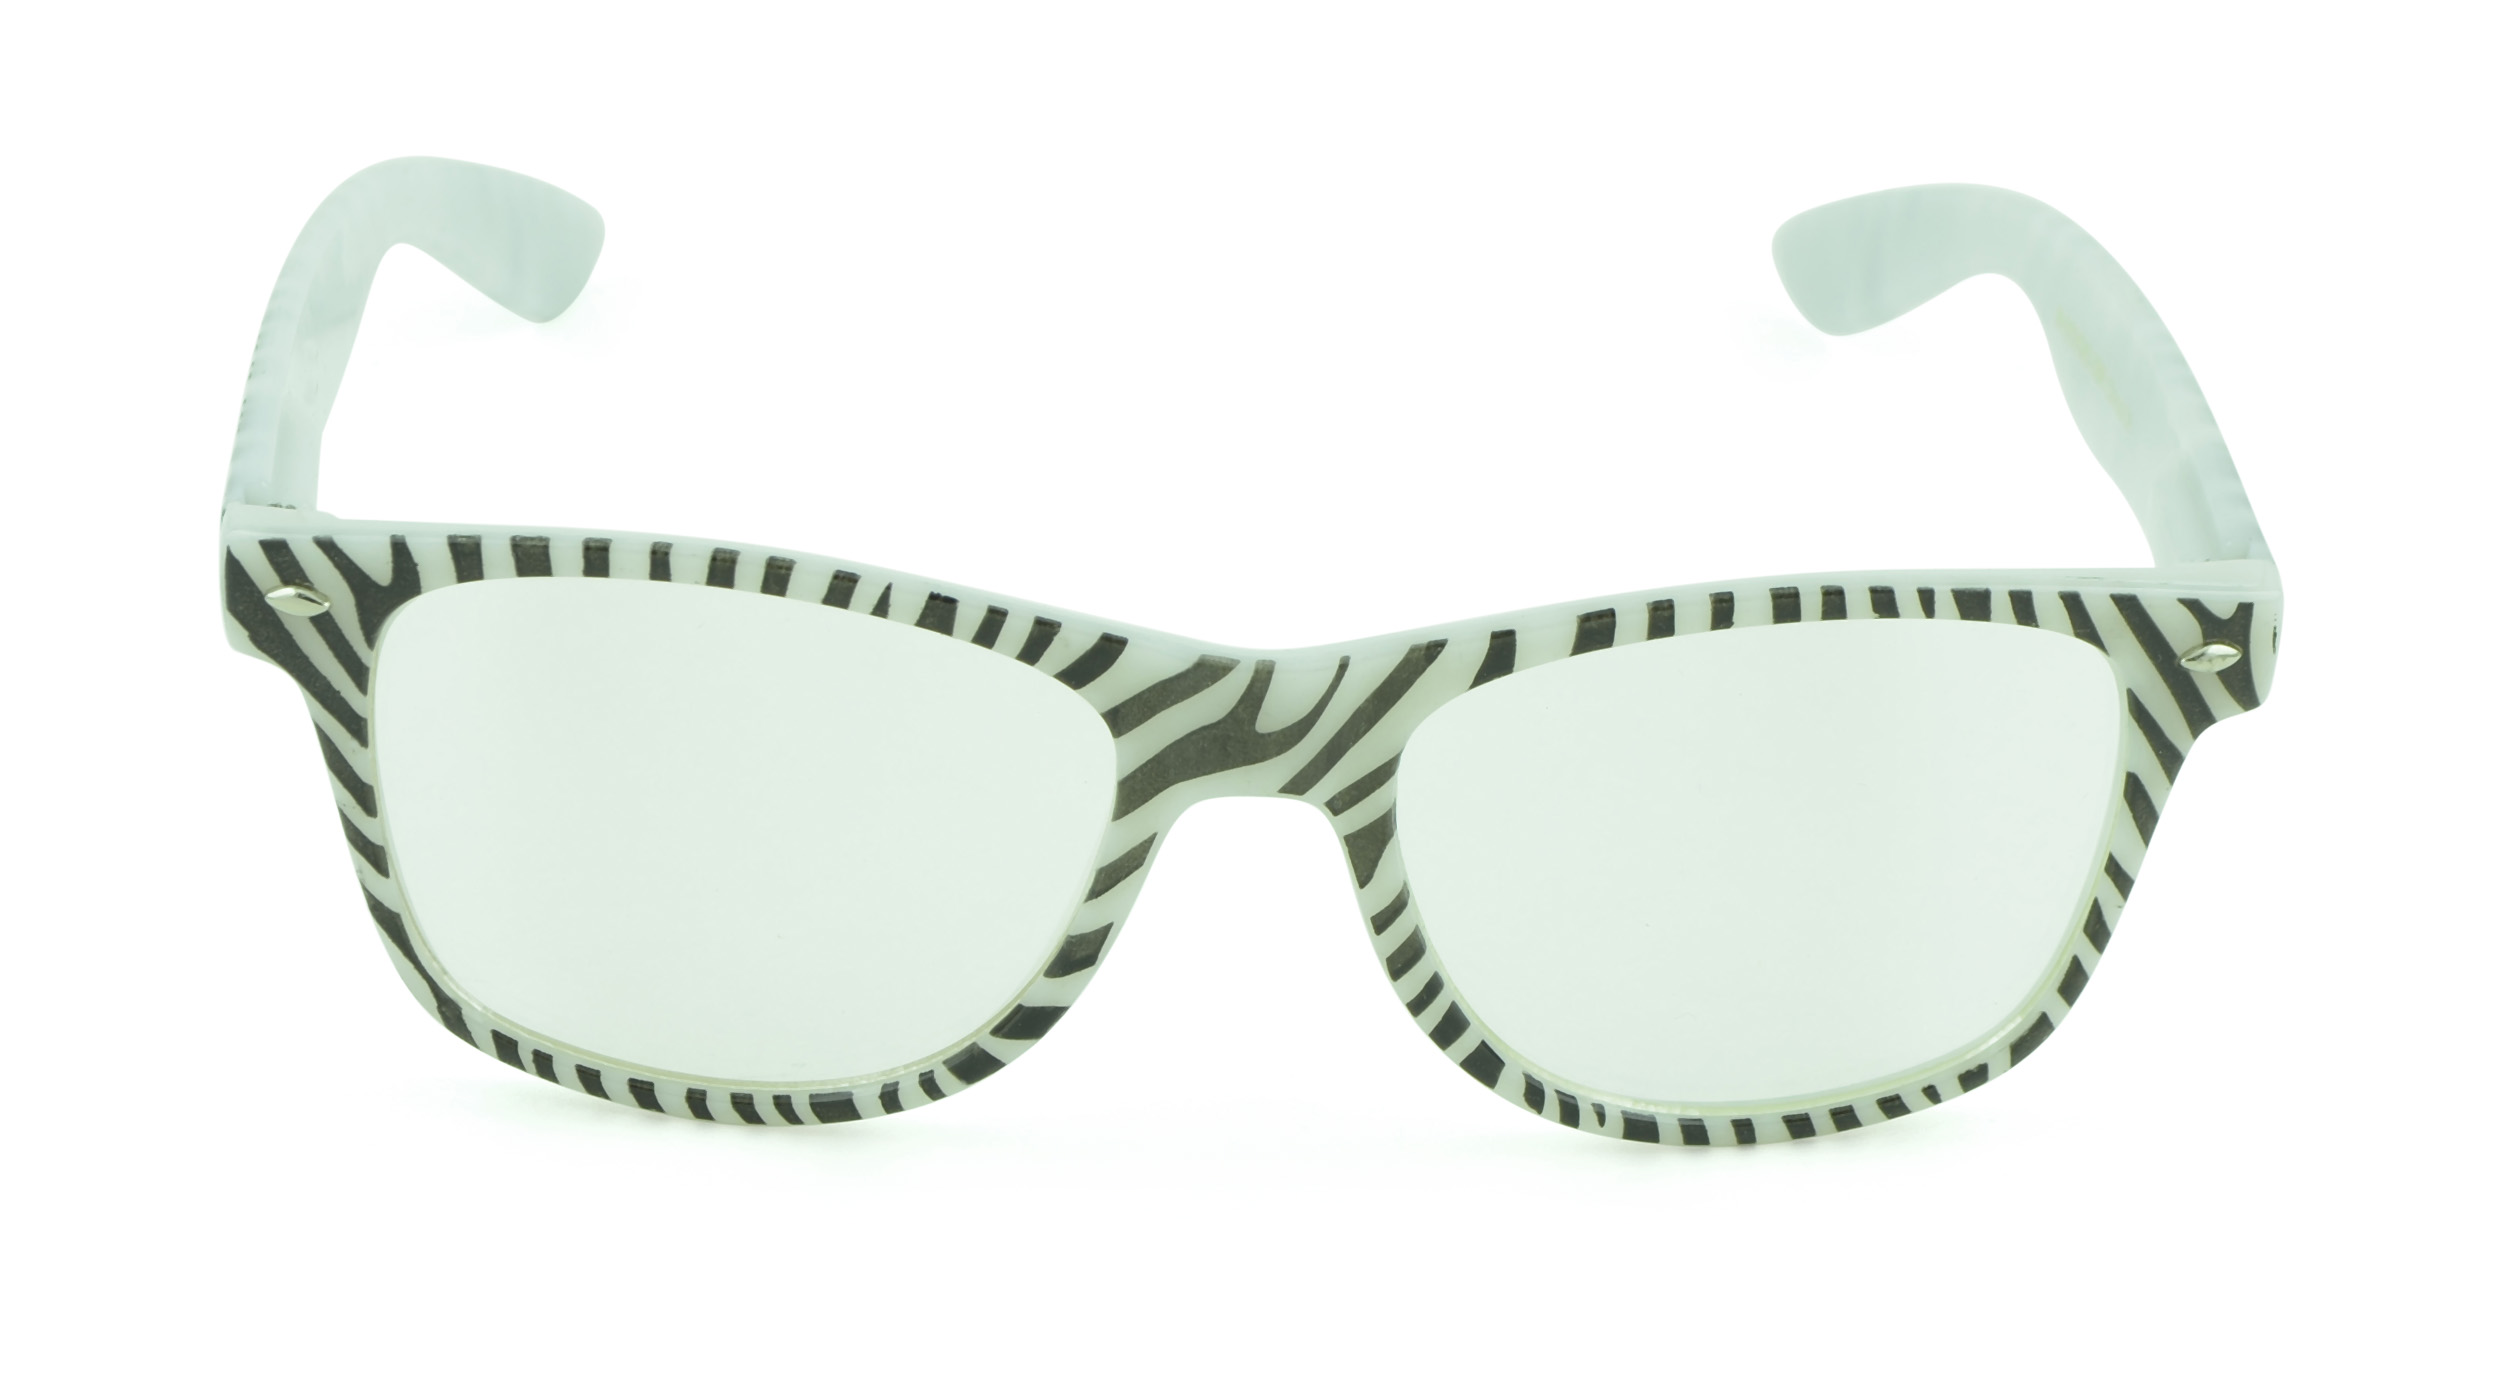 Belle Donne - Unisex Cool Rave Style Glow in the Dark Sunglasses - White Zebra